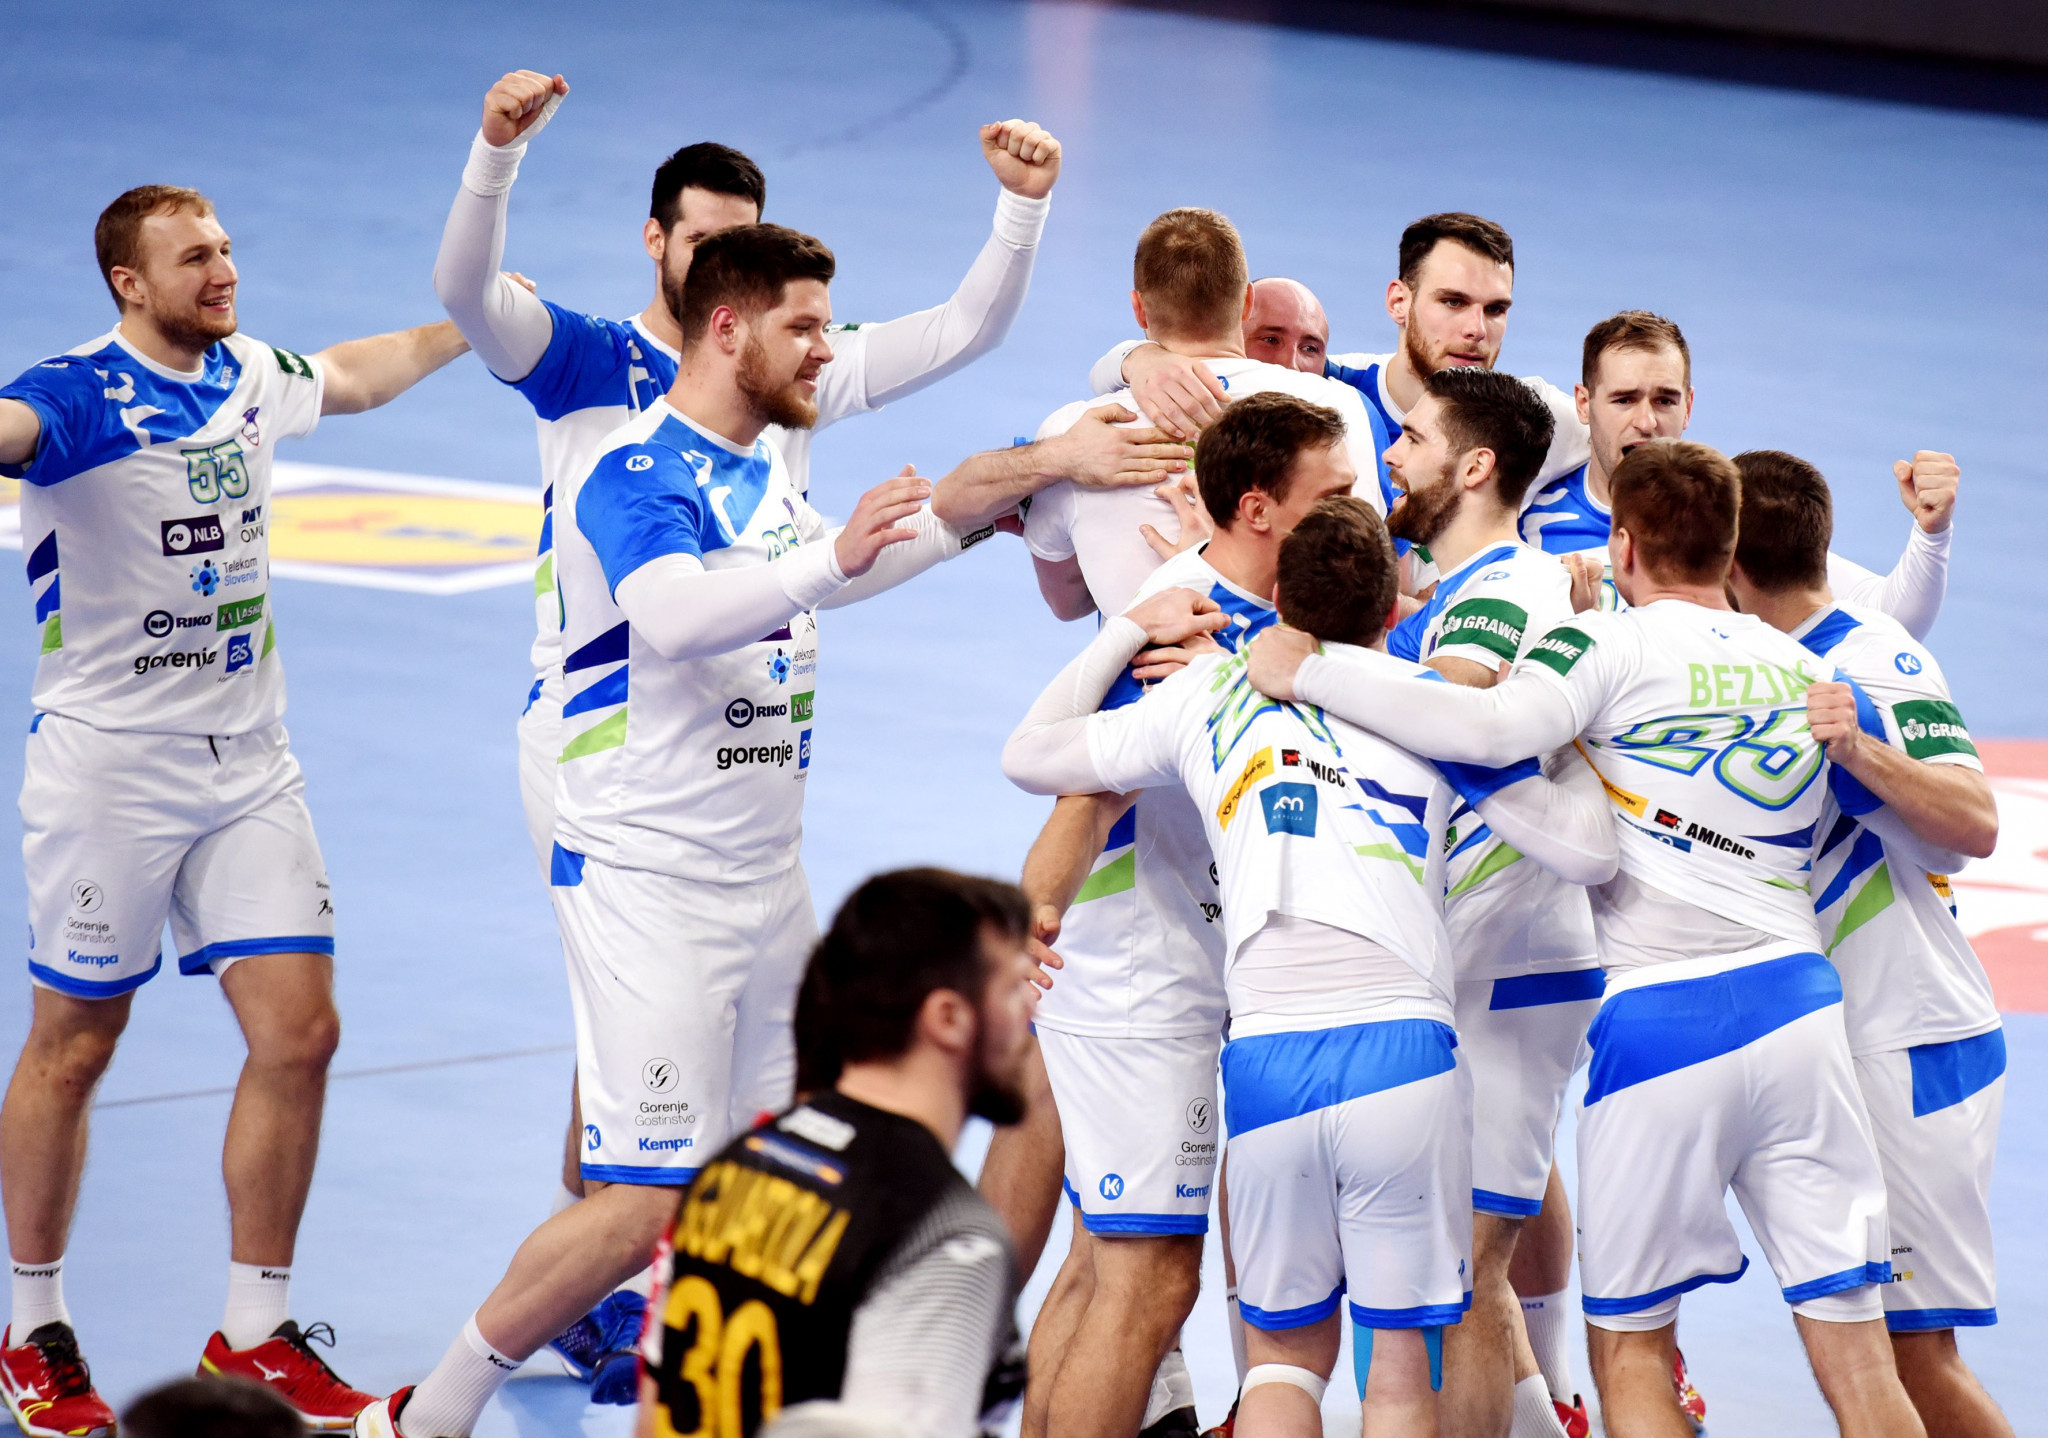 Spain suffer shock loss to Slovenia at European Men's Handball Championship